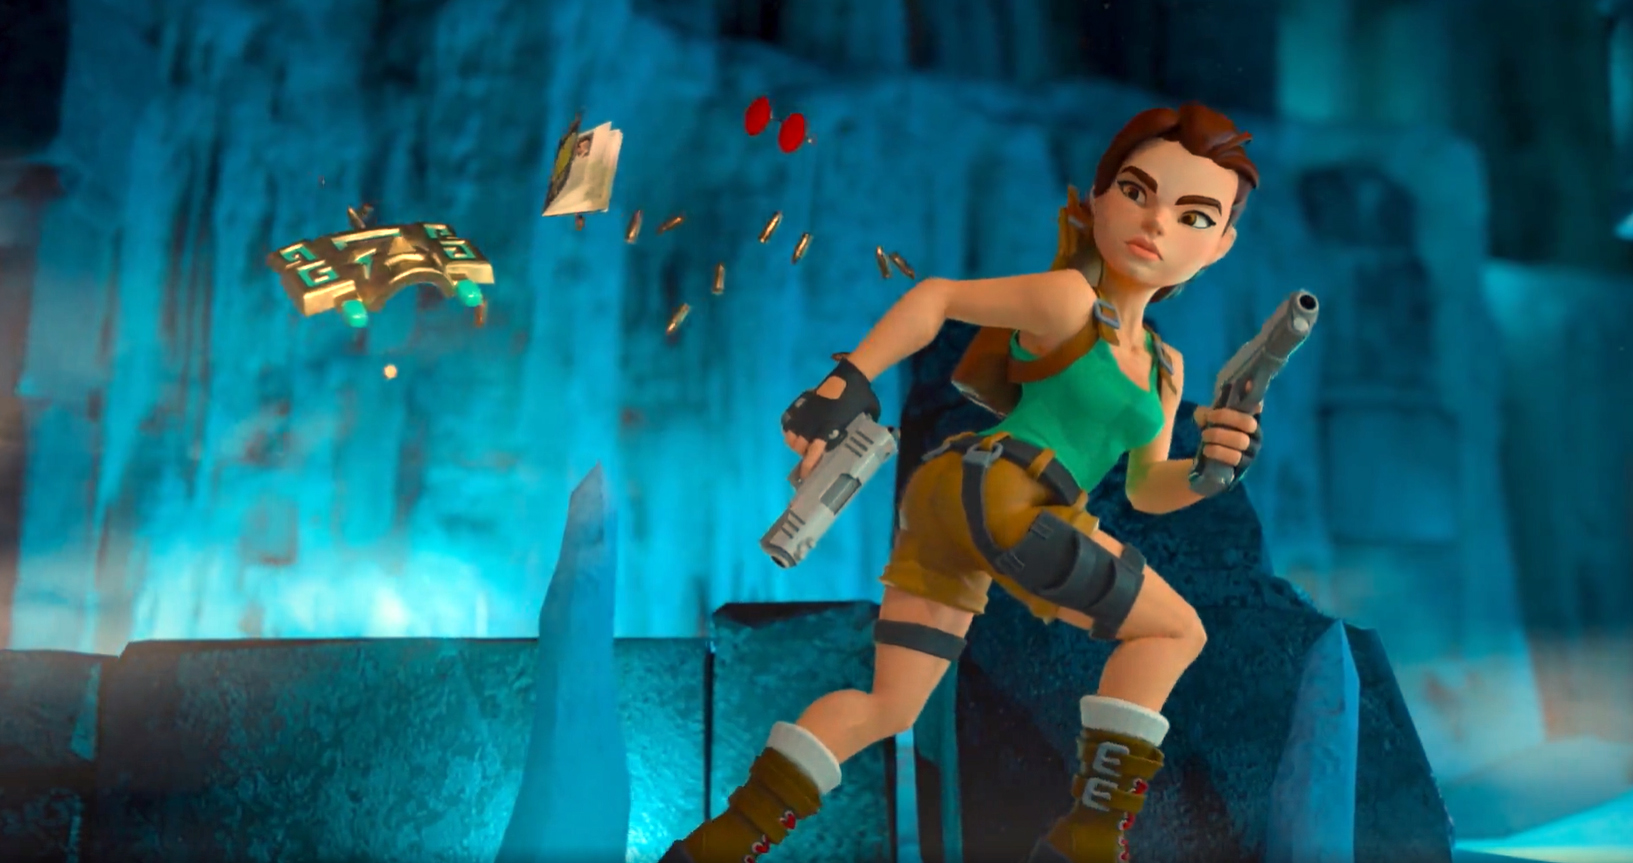 Tomb Raider Reloaded - Lara Croft dans l’antre du mobile